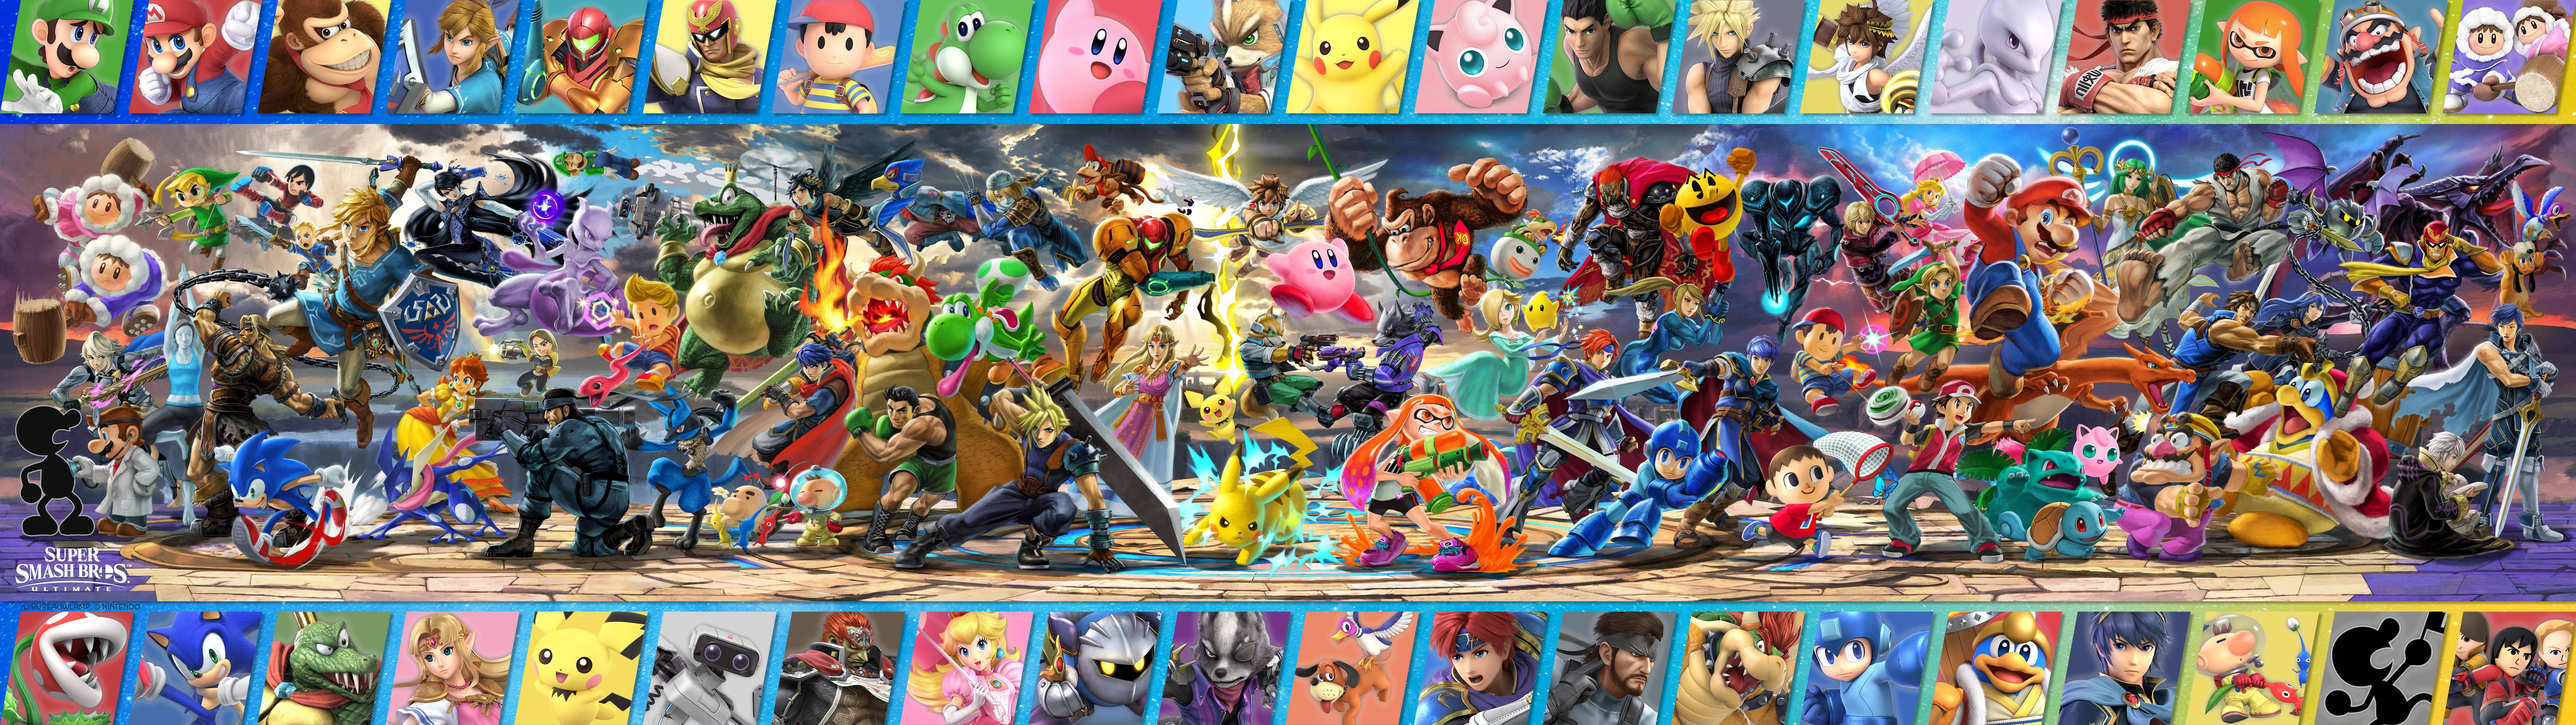 Dual Monitor Super Smash Bros Background